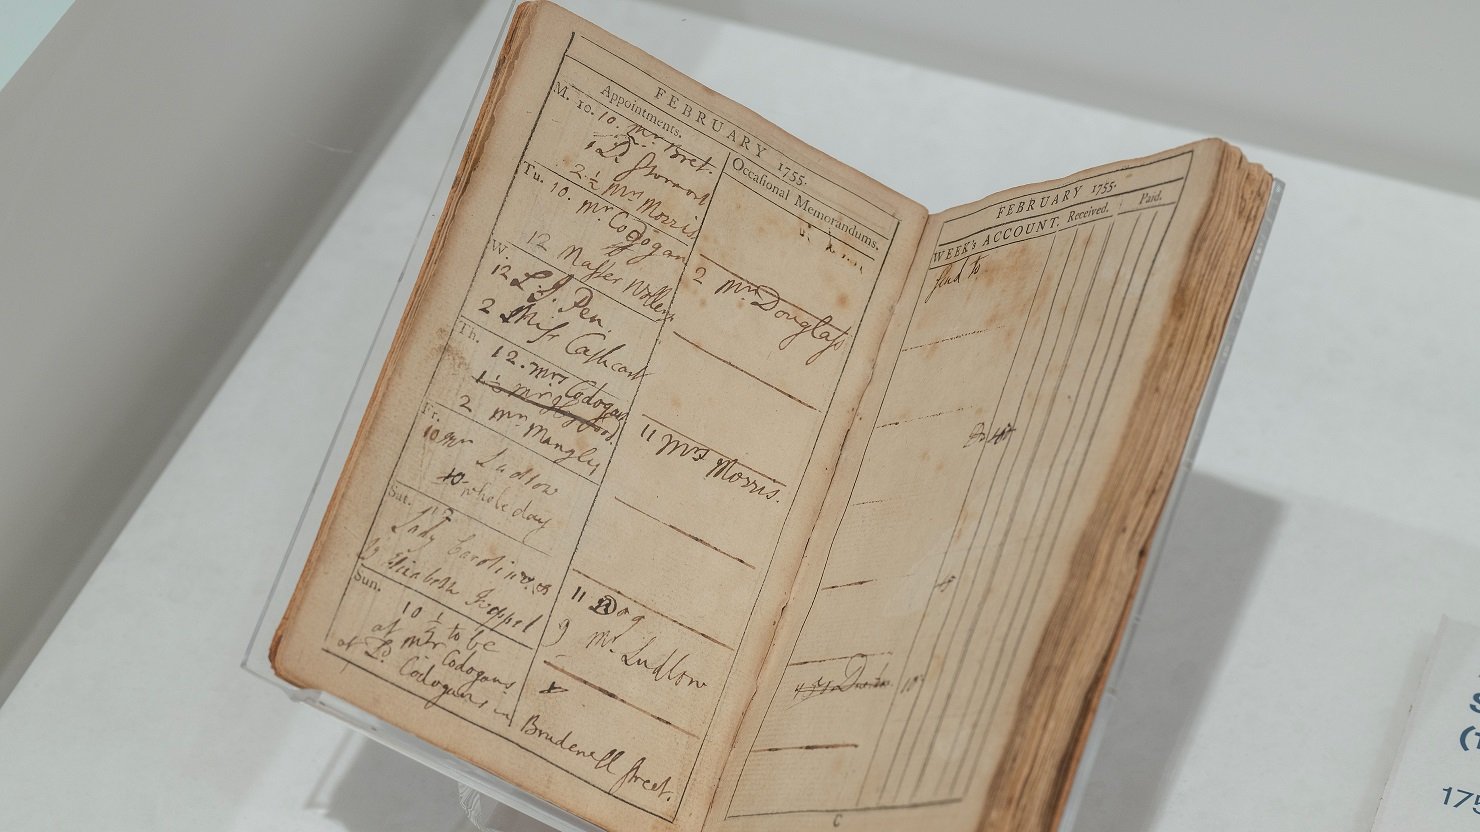 Sir Joshua Reynolds' 1755 appointment book